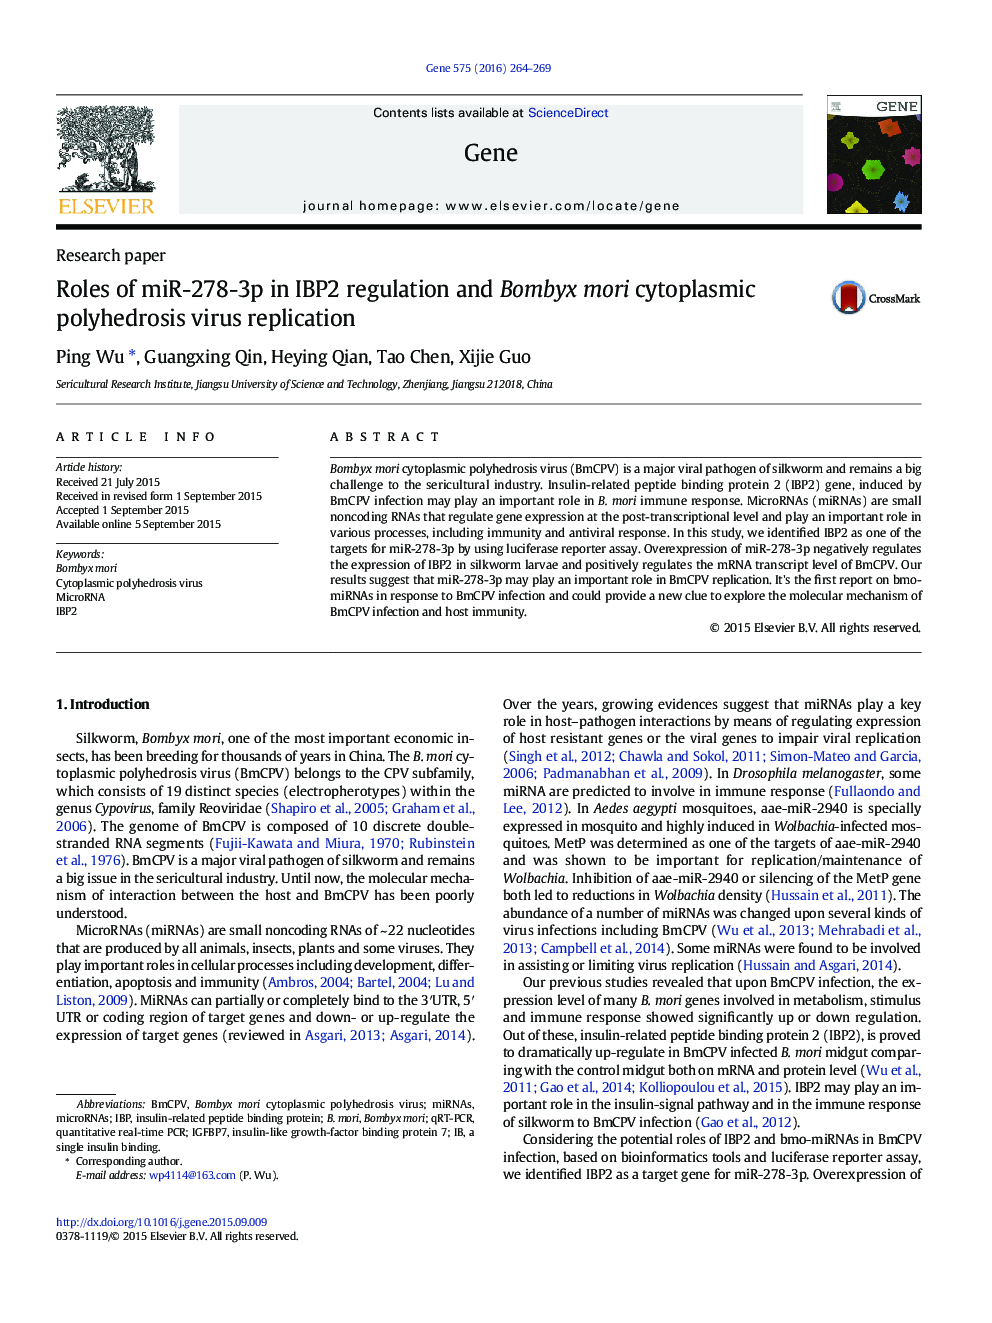 Roles of miR-278-3p in IBP2 regulation and Bombyx mori cytoplasmic polyhedrosis virus replication